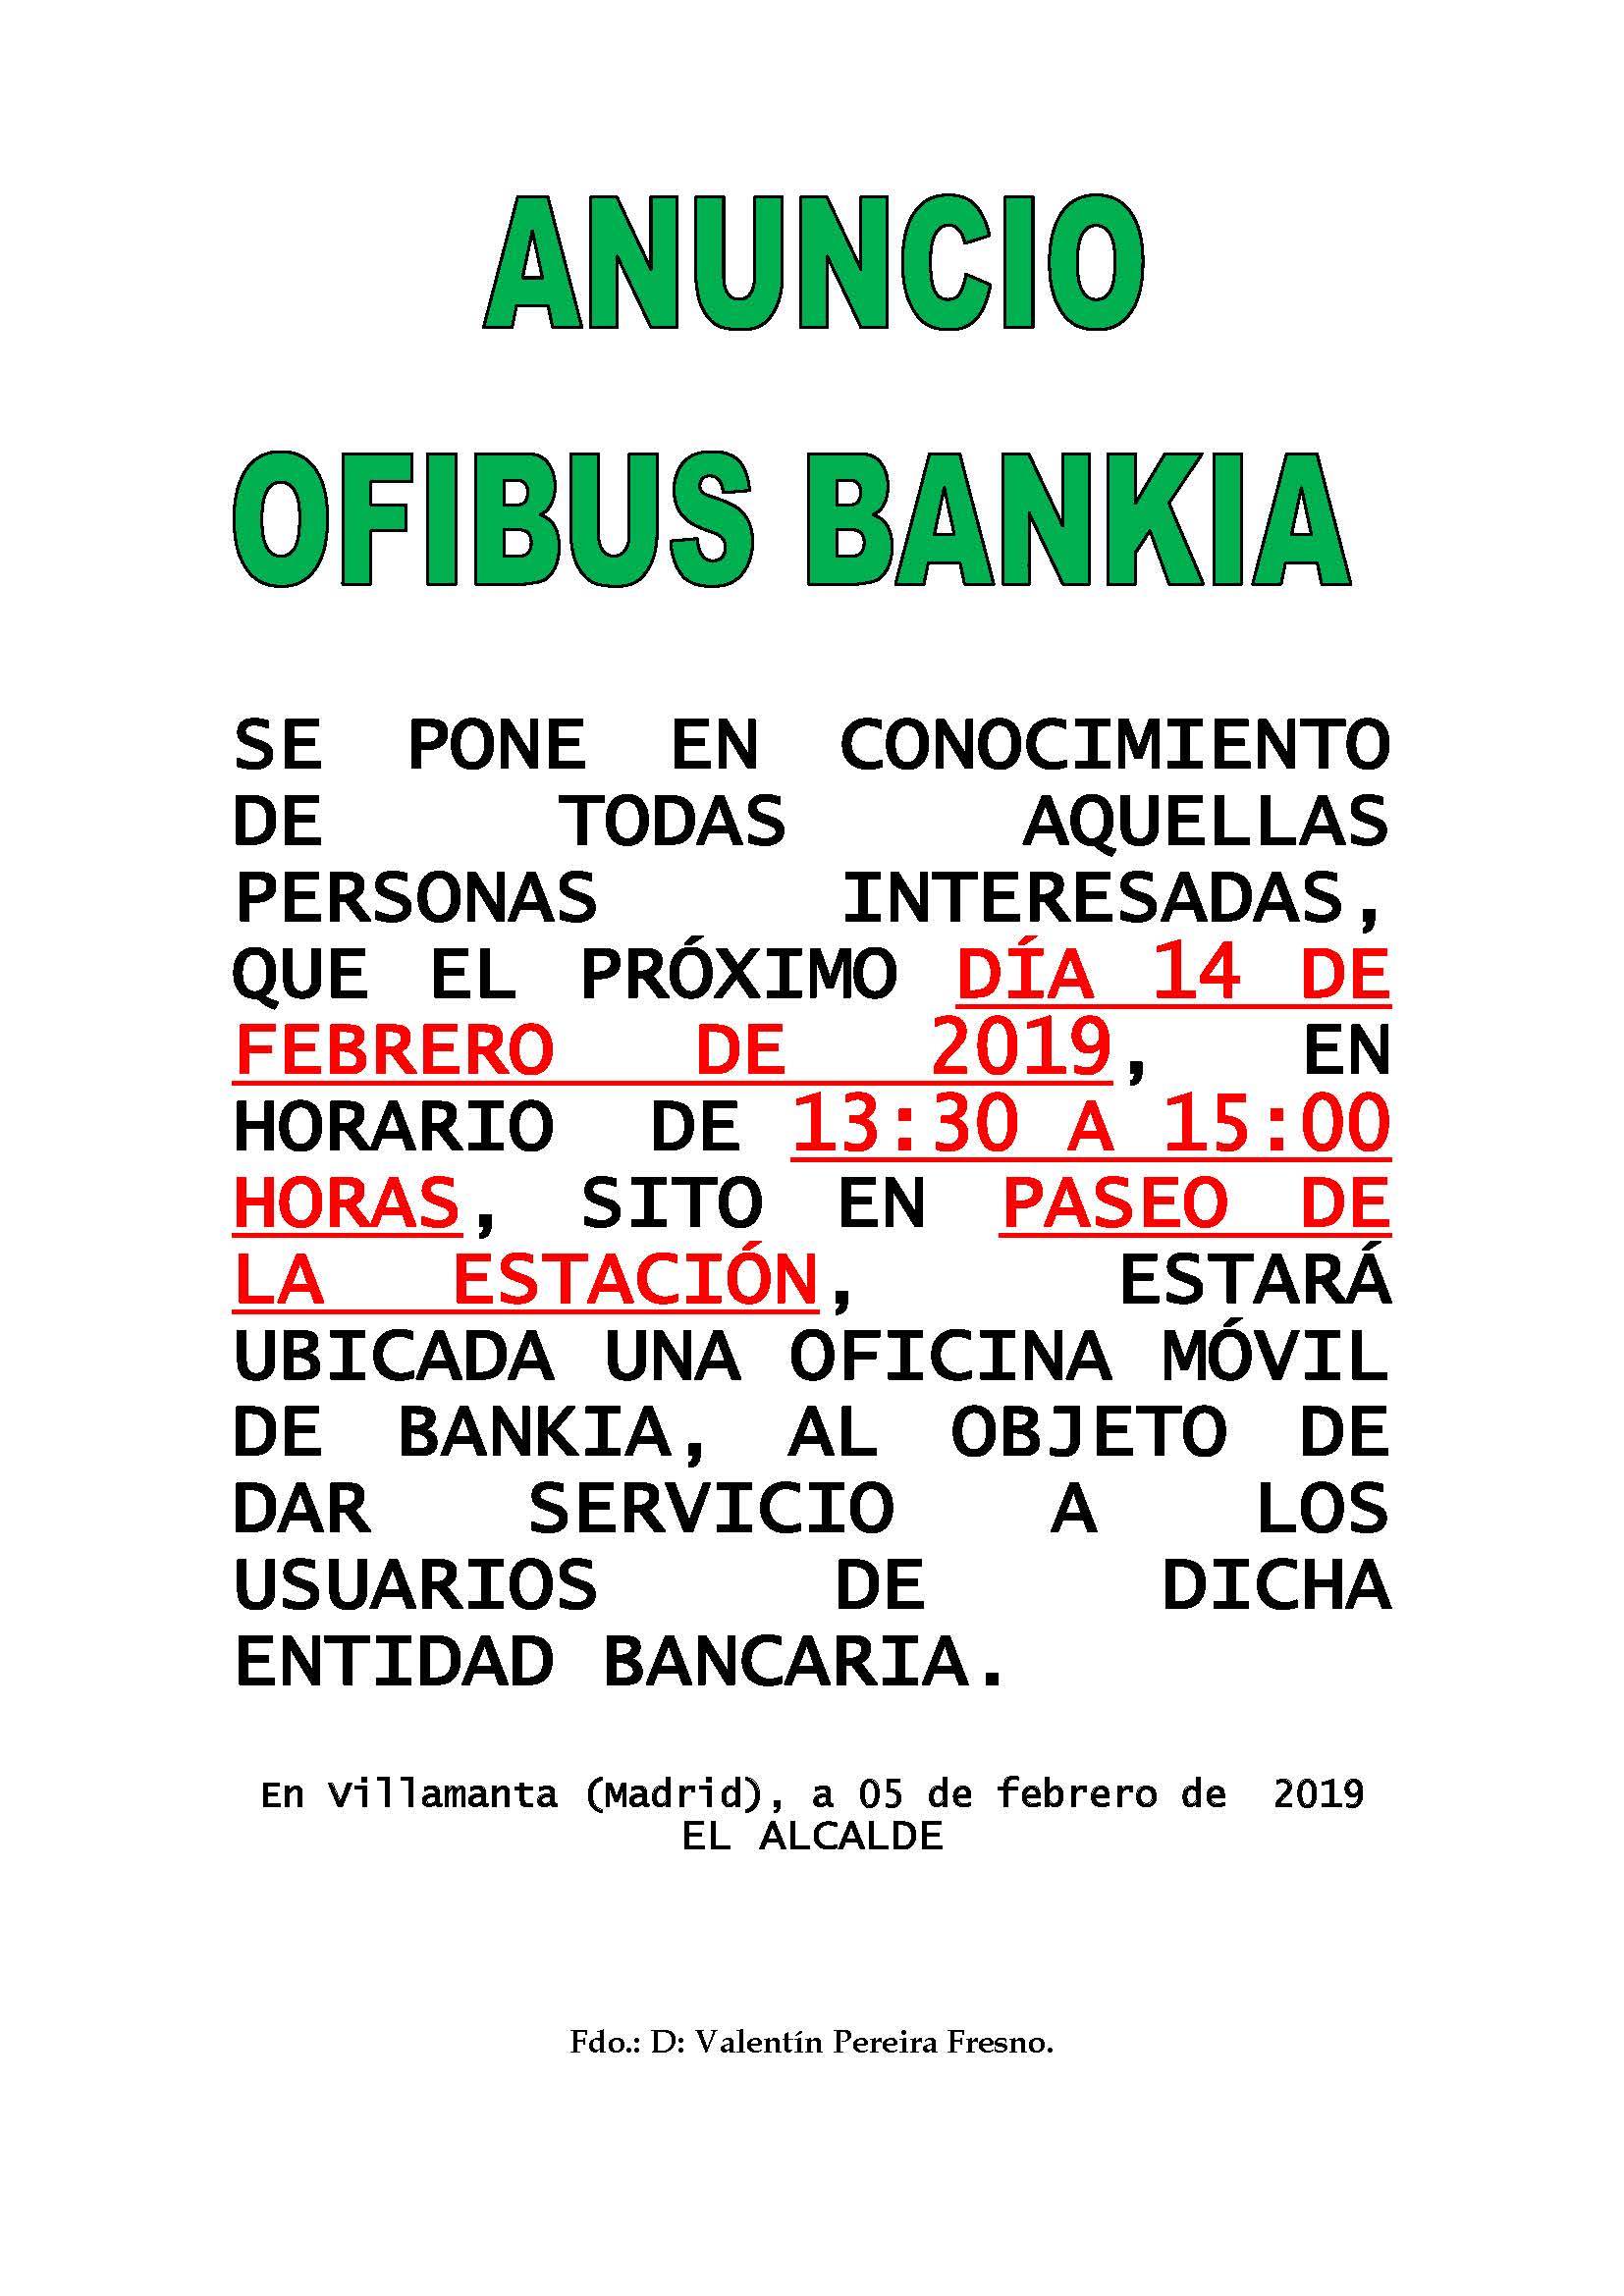 Ofibus Bankia 14 de Febrero